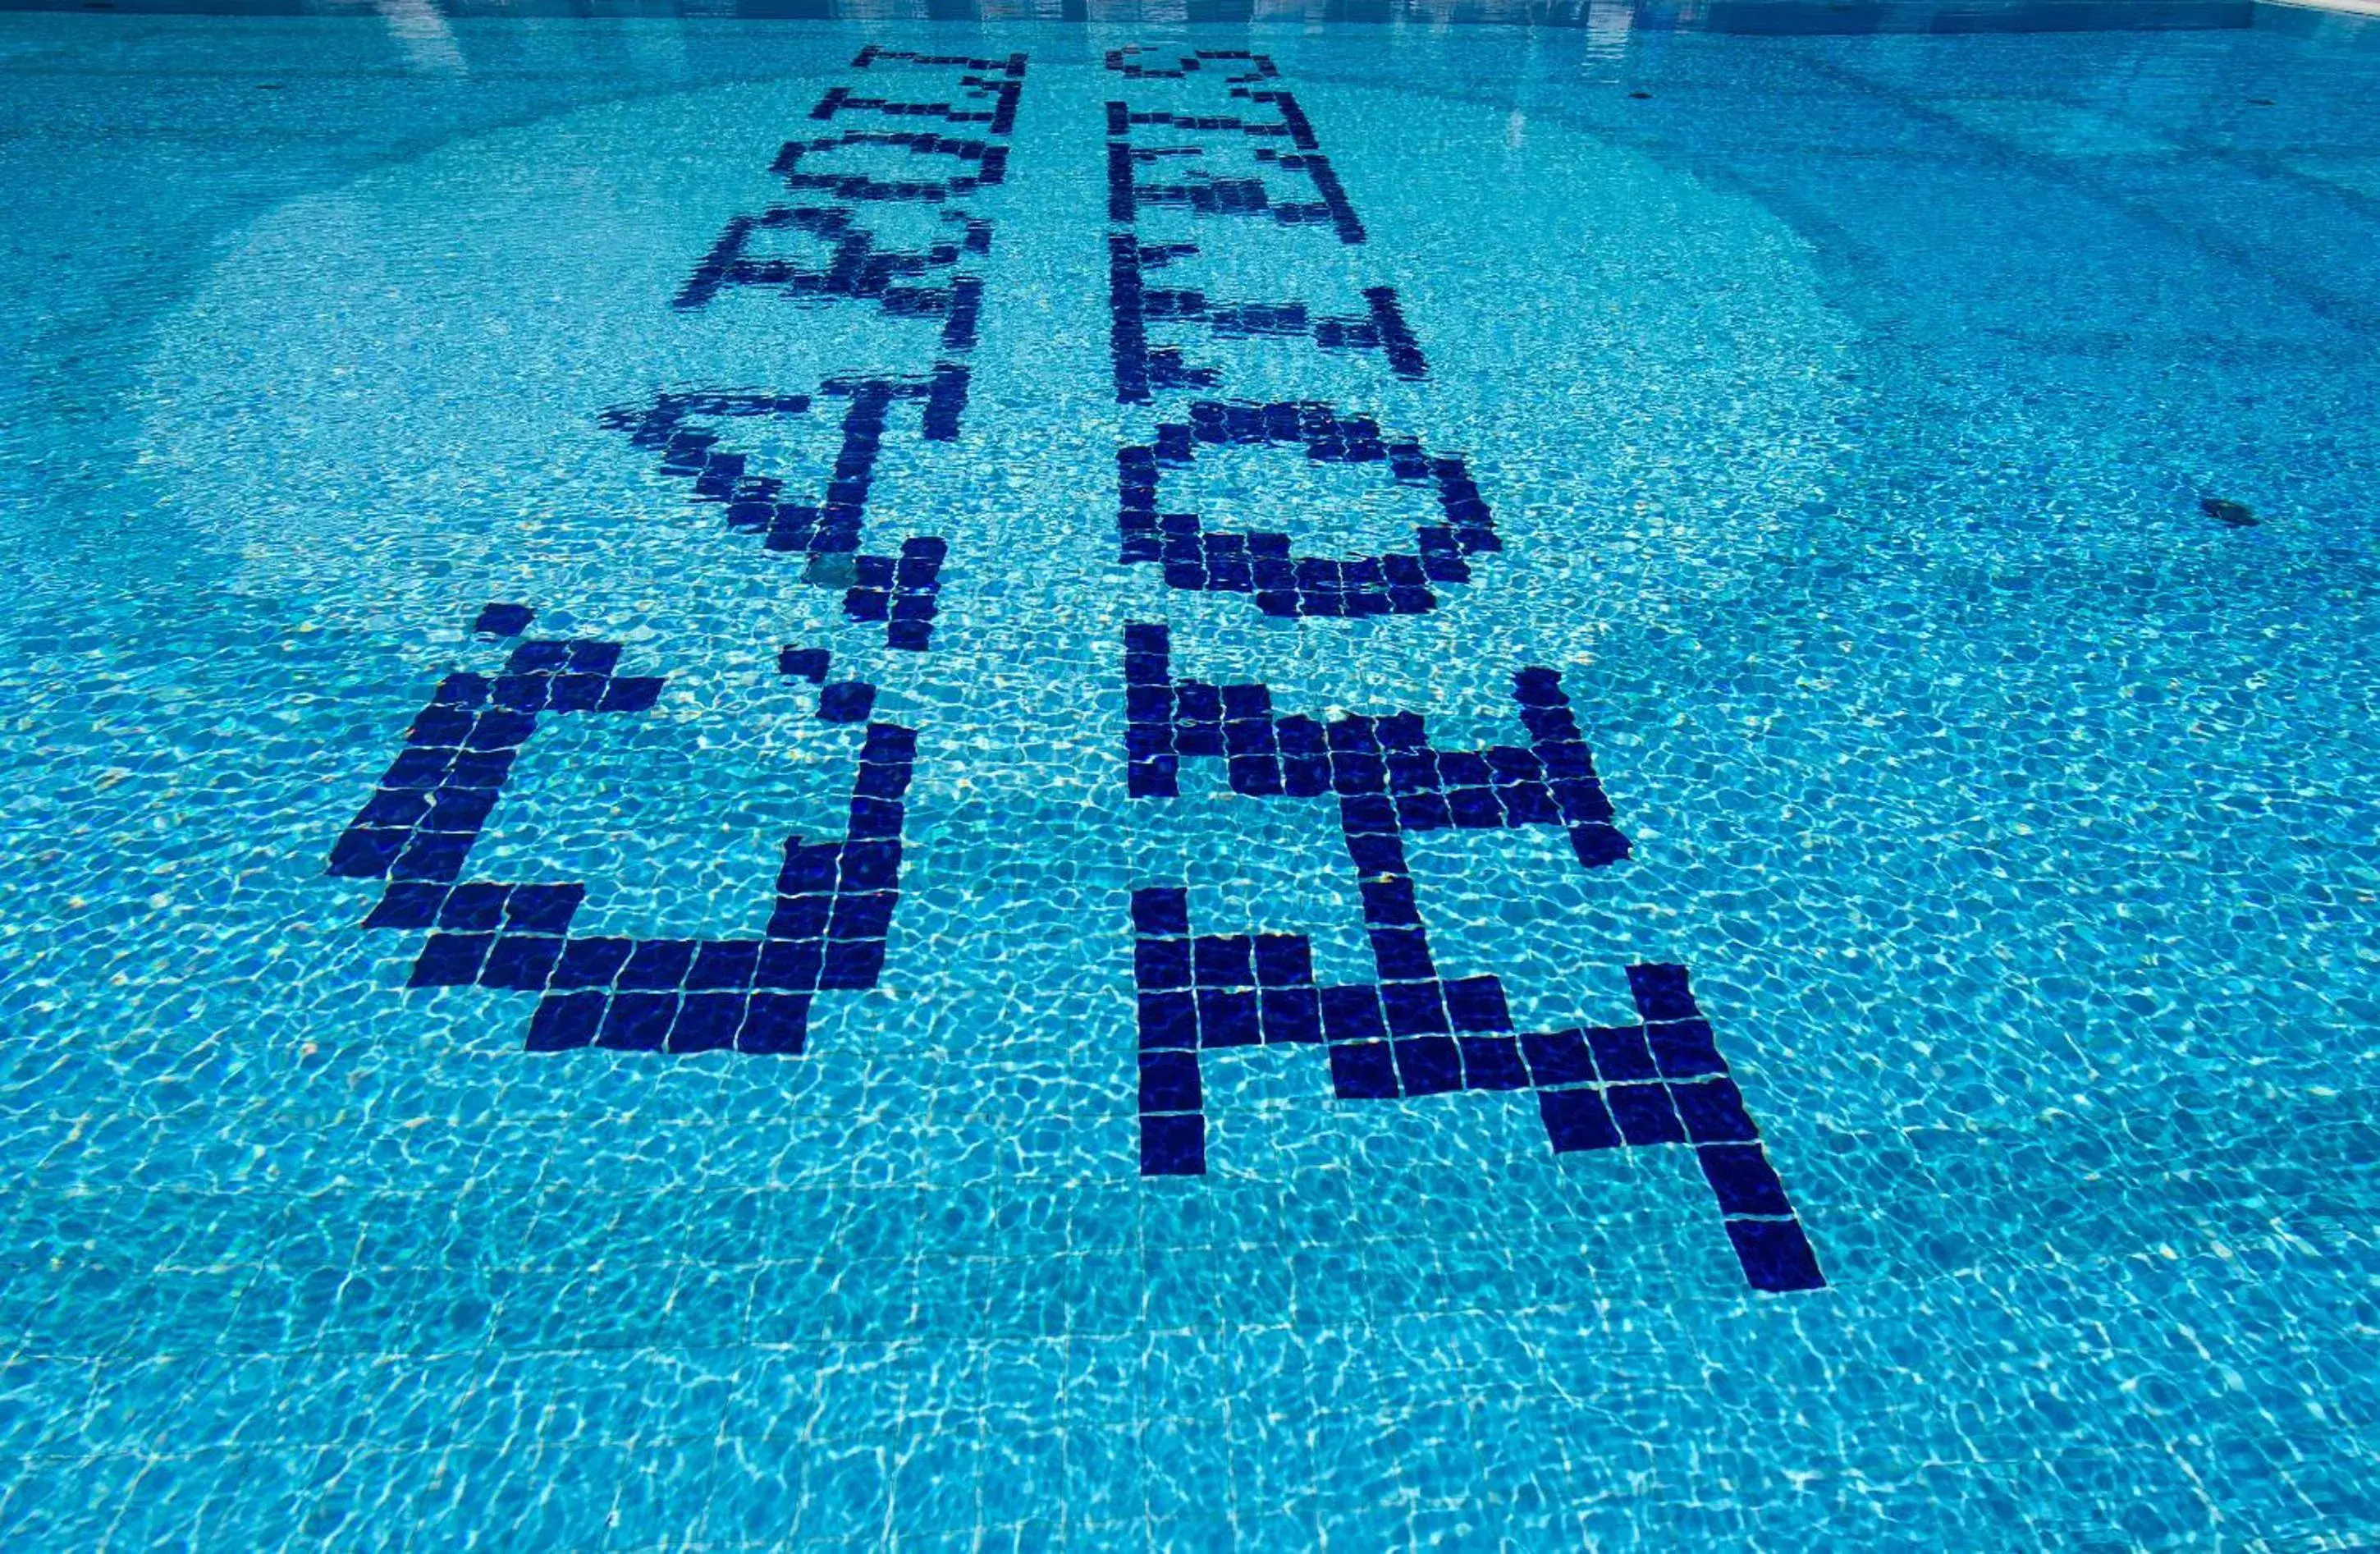 Swimming Pool in Joli Park Hotel - Caroli Hotels